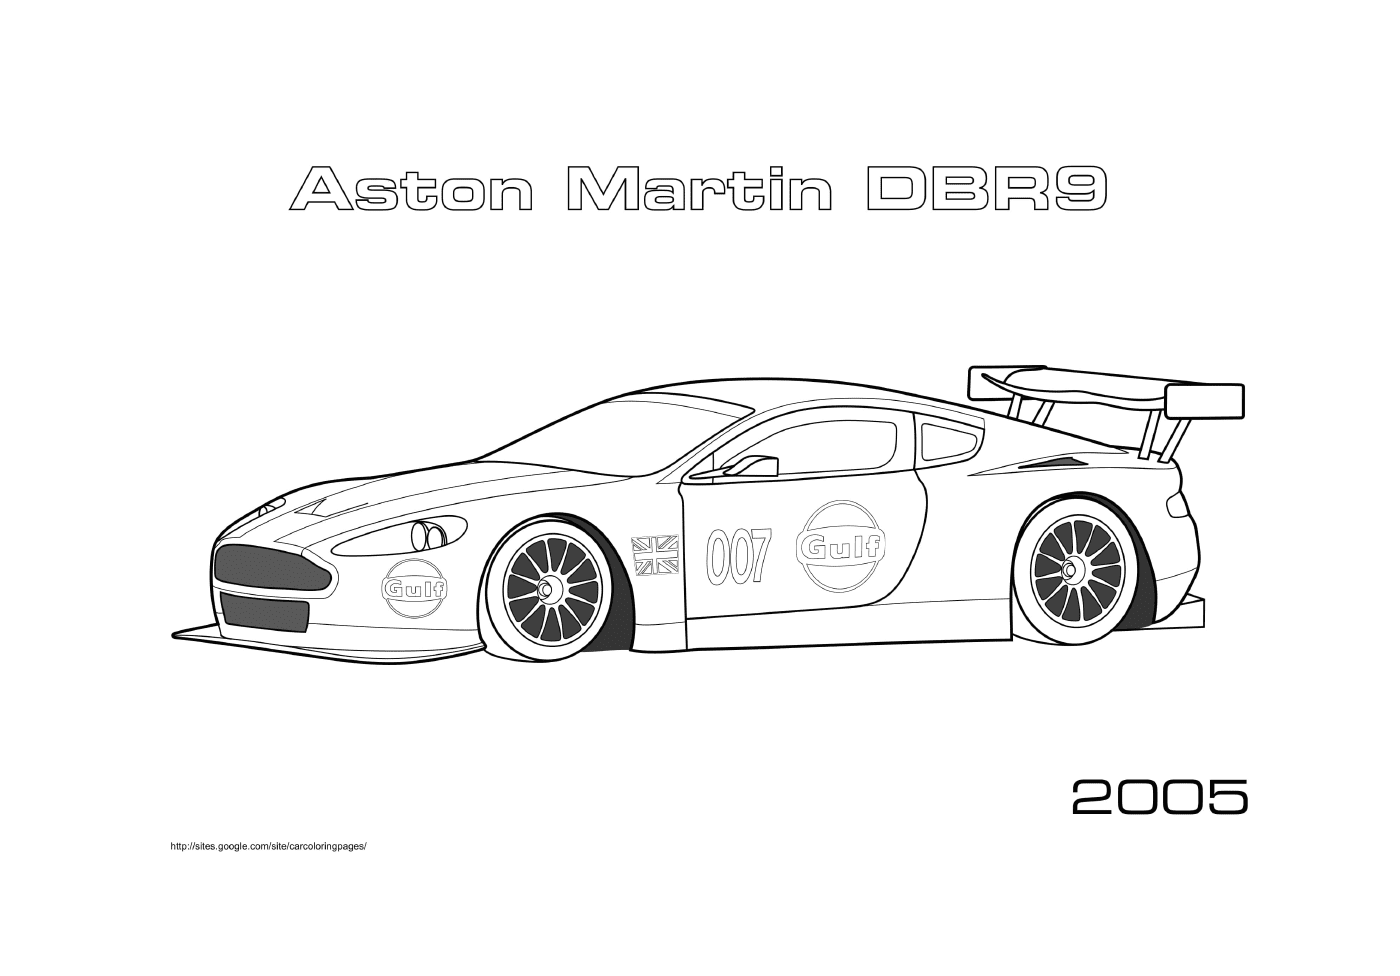  Aston Martin Dbr9 of 2005 